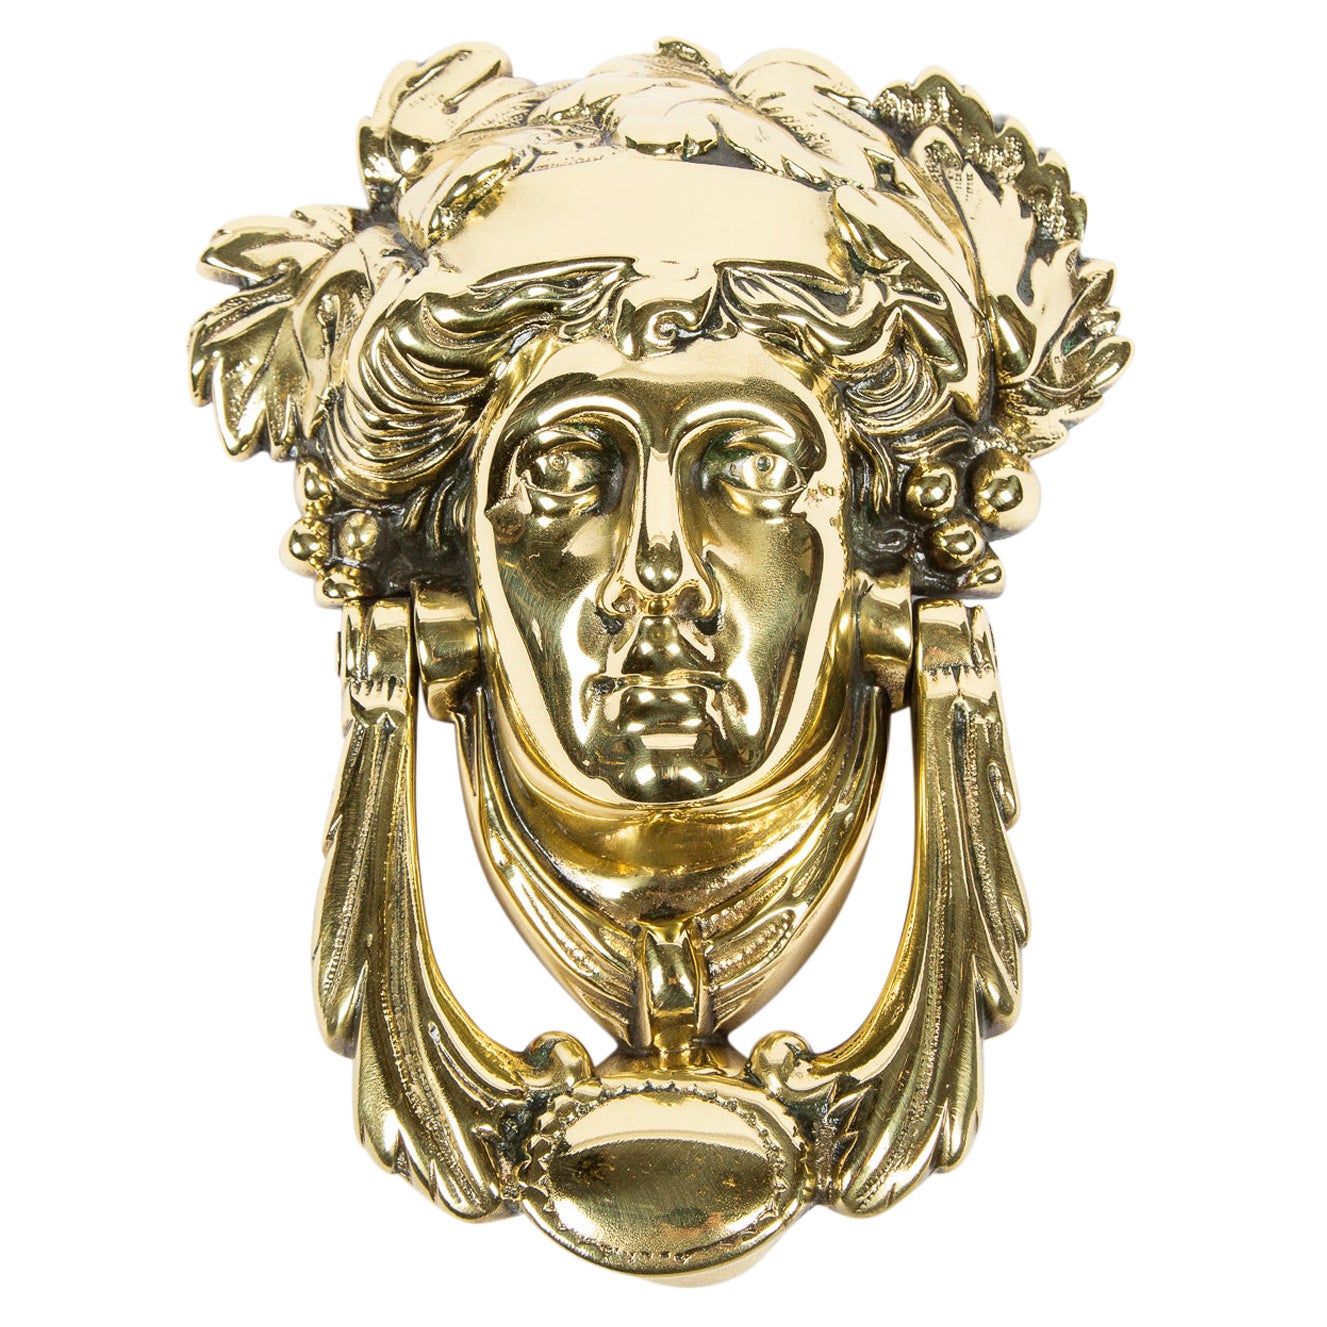 Brass Door Knocker with the Head of the Goddess Pamona, circa 1900